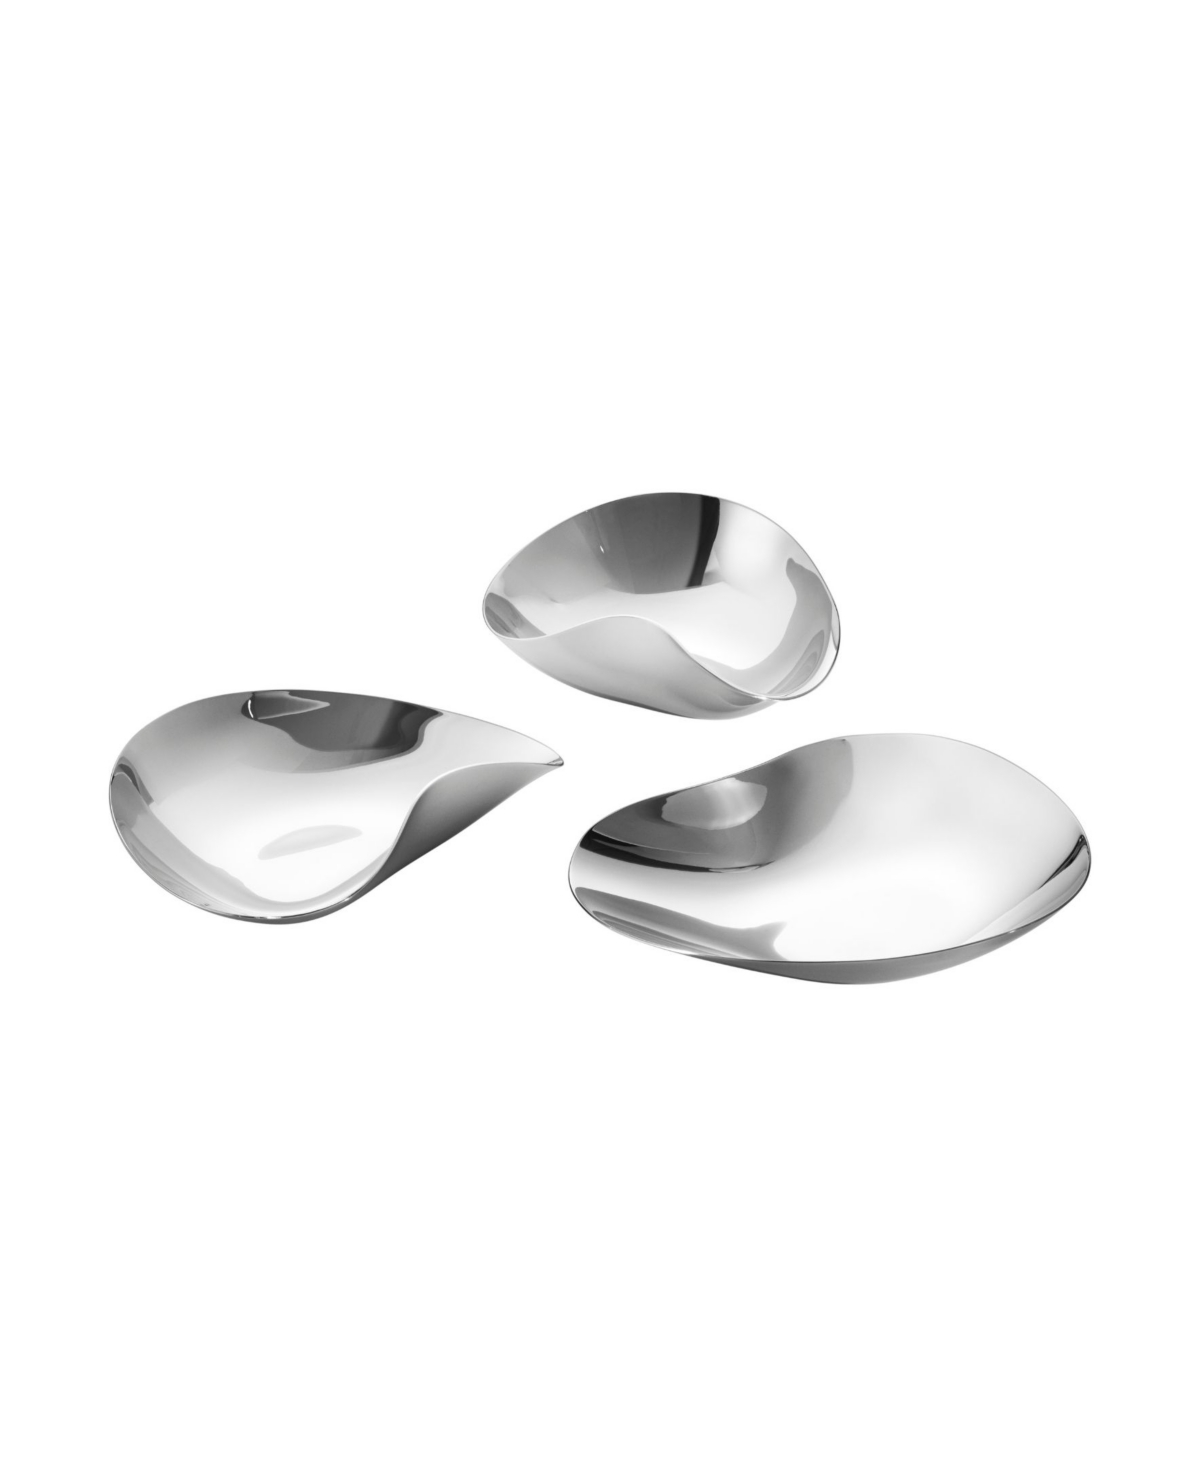 Indulgence Condiment Bowls, 3 Piece - Silver